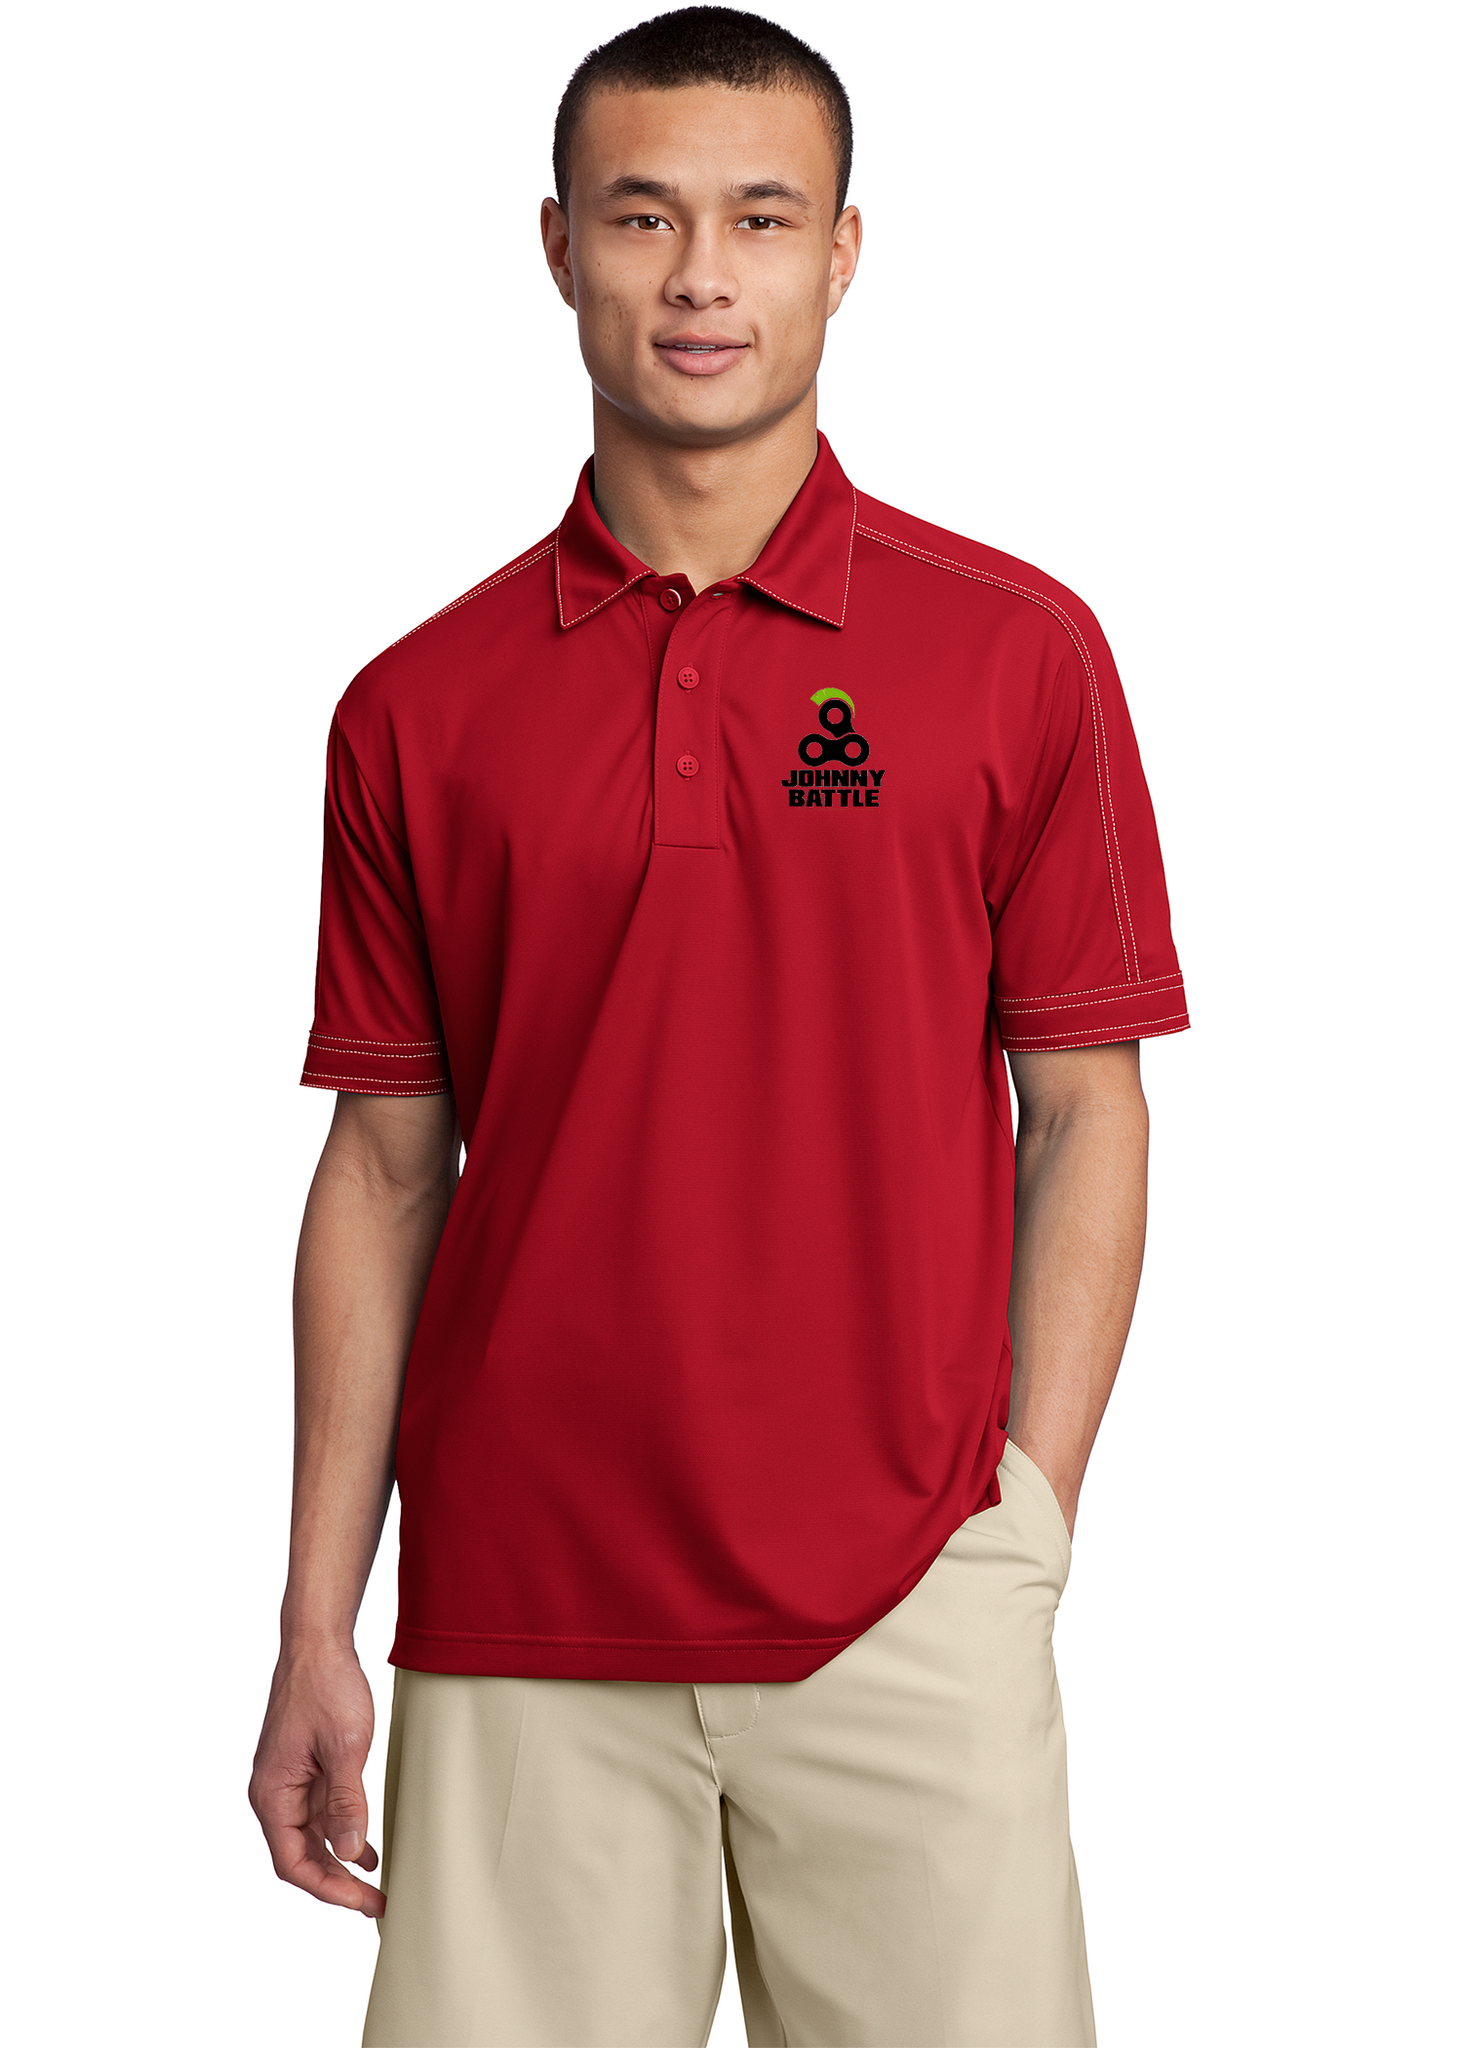 Custom Embroidered Polo Shirts Moisture Wicking Sport-tek 